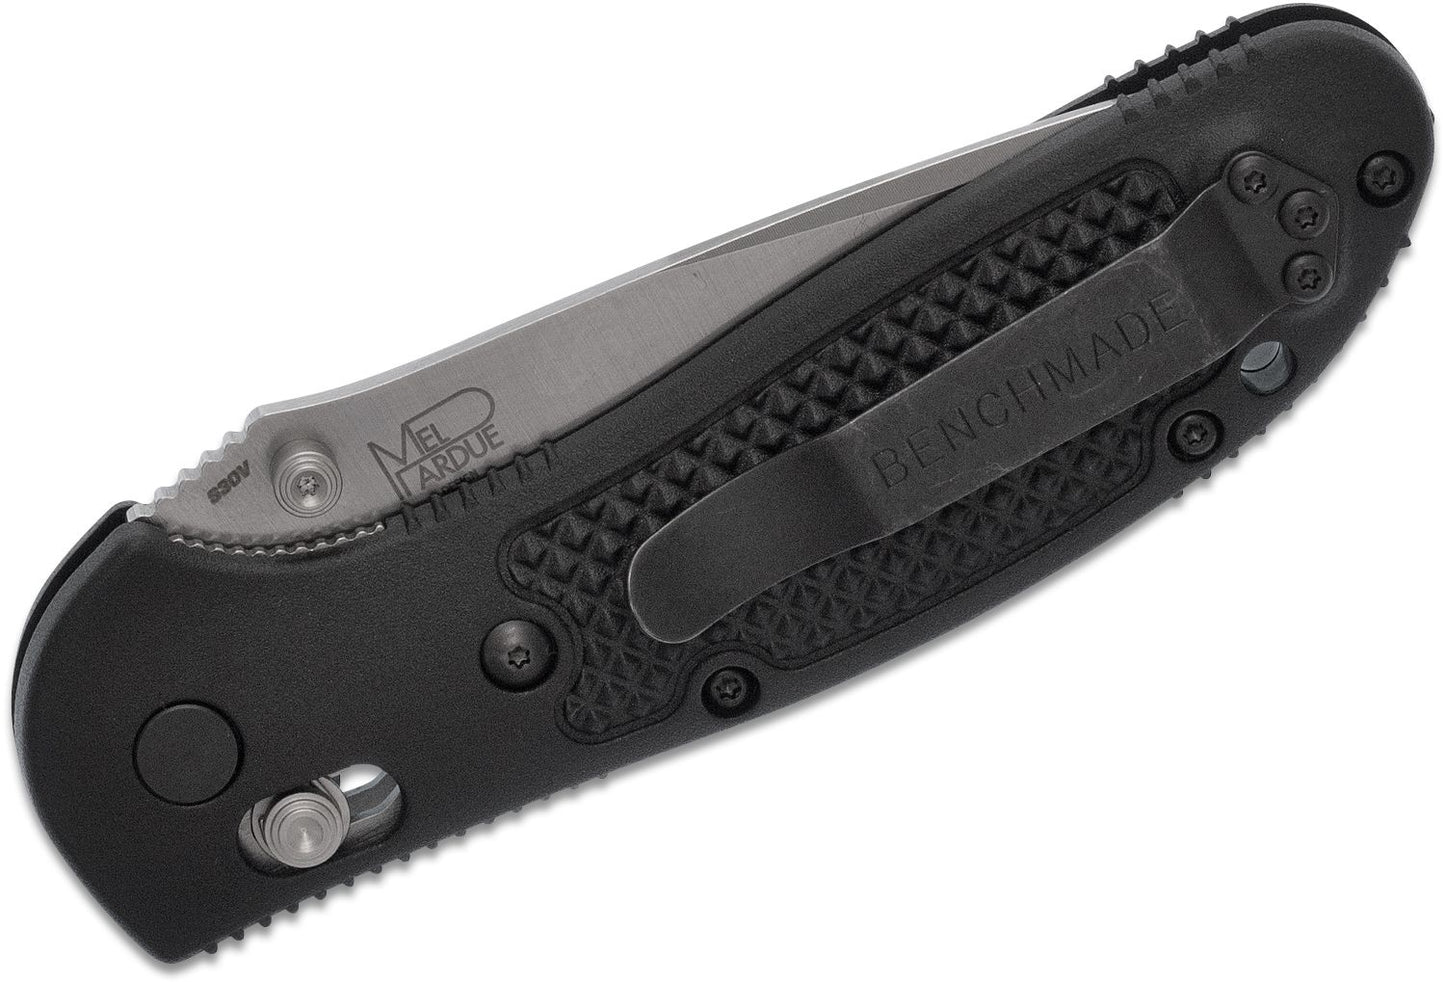 551-S30V Griptilian AXIS Lock Folding Knife 3.45" S30V Satin Drop Point Plain Blade, Black Noryl GTX Handles